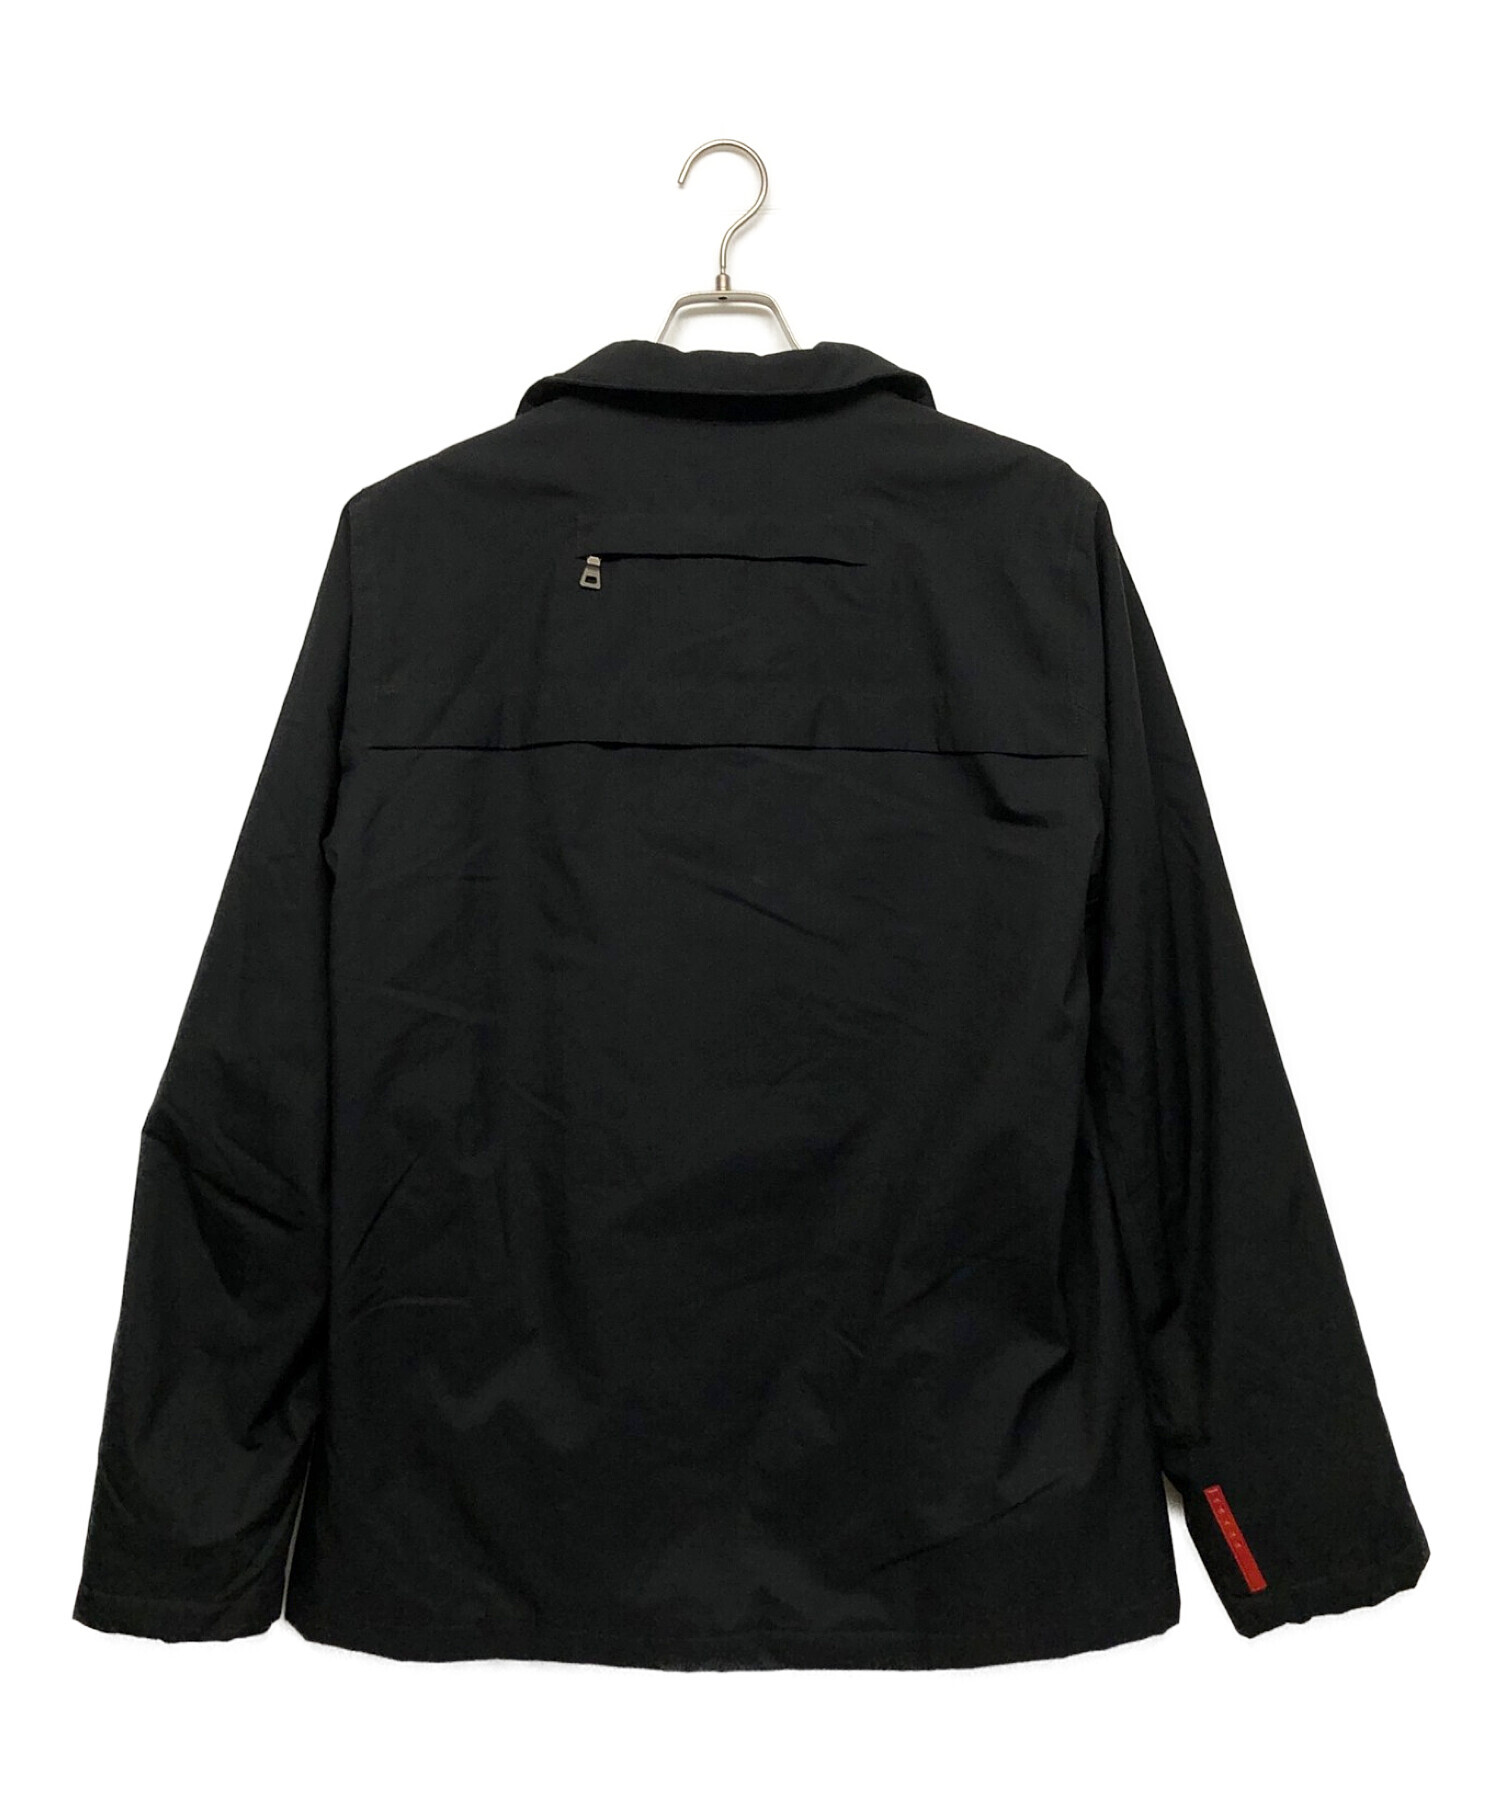 PRADA SPORTS (プラダスポーツ) GORE TEX中綿ジャケット ブラック サイズ:48